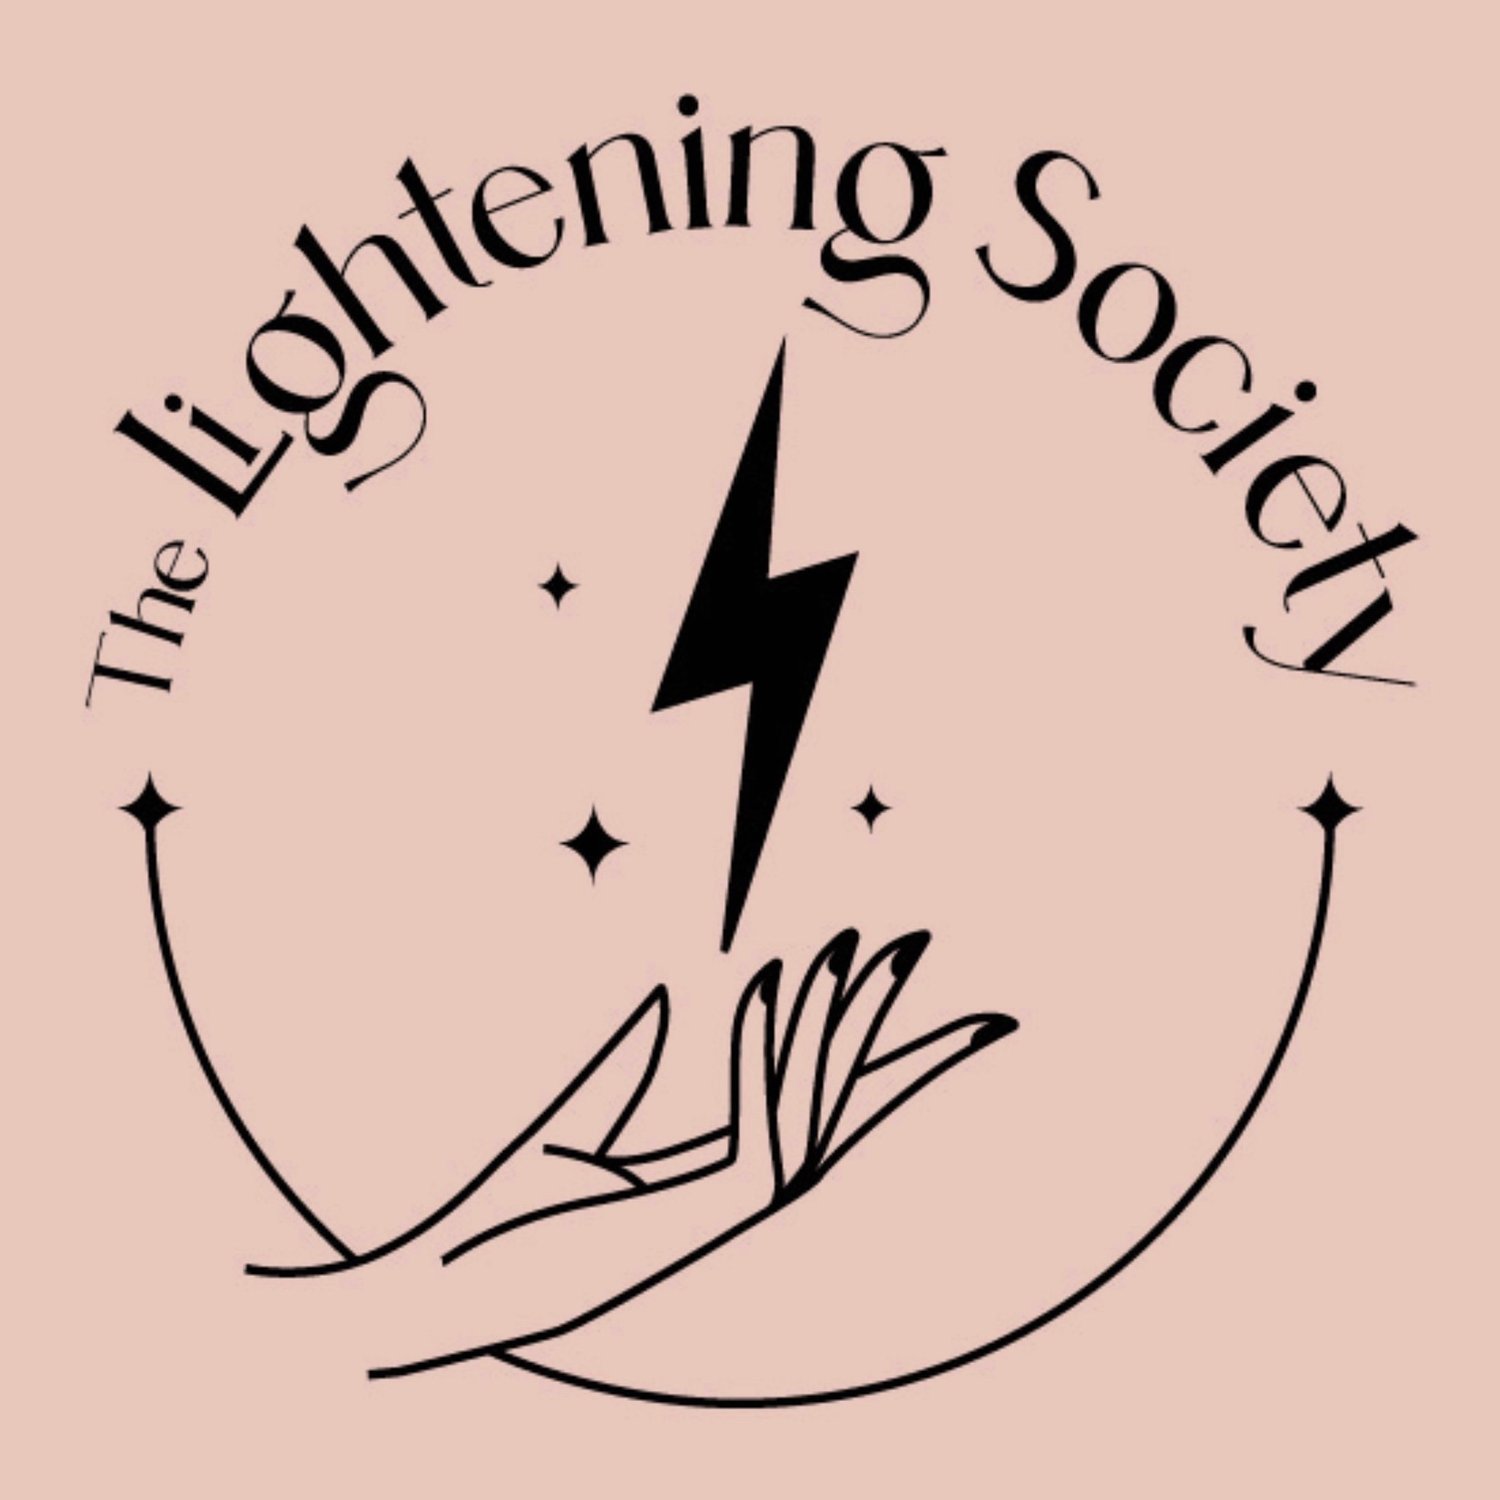 The Lightening Society Salon